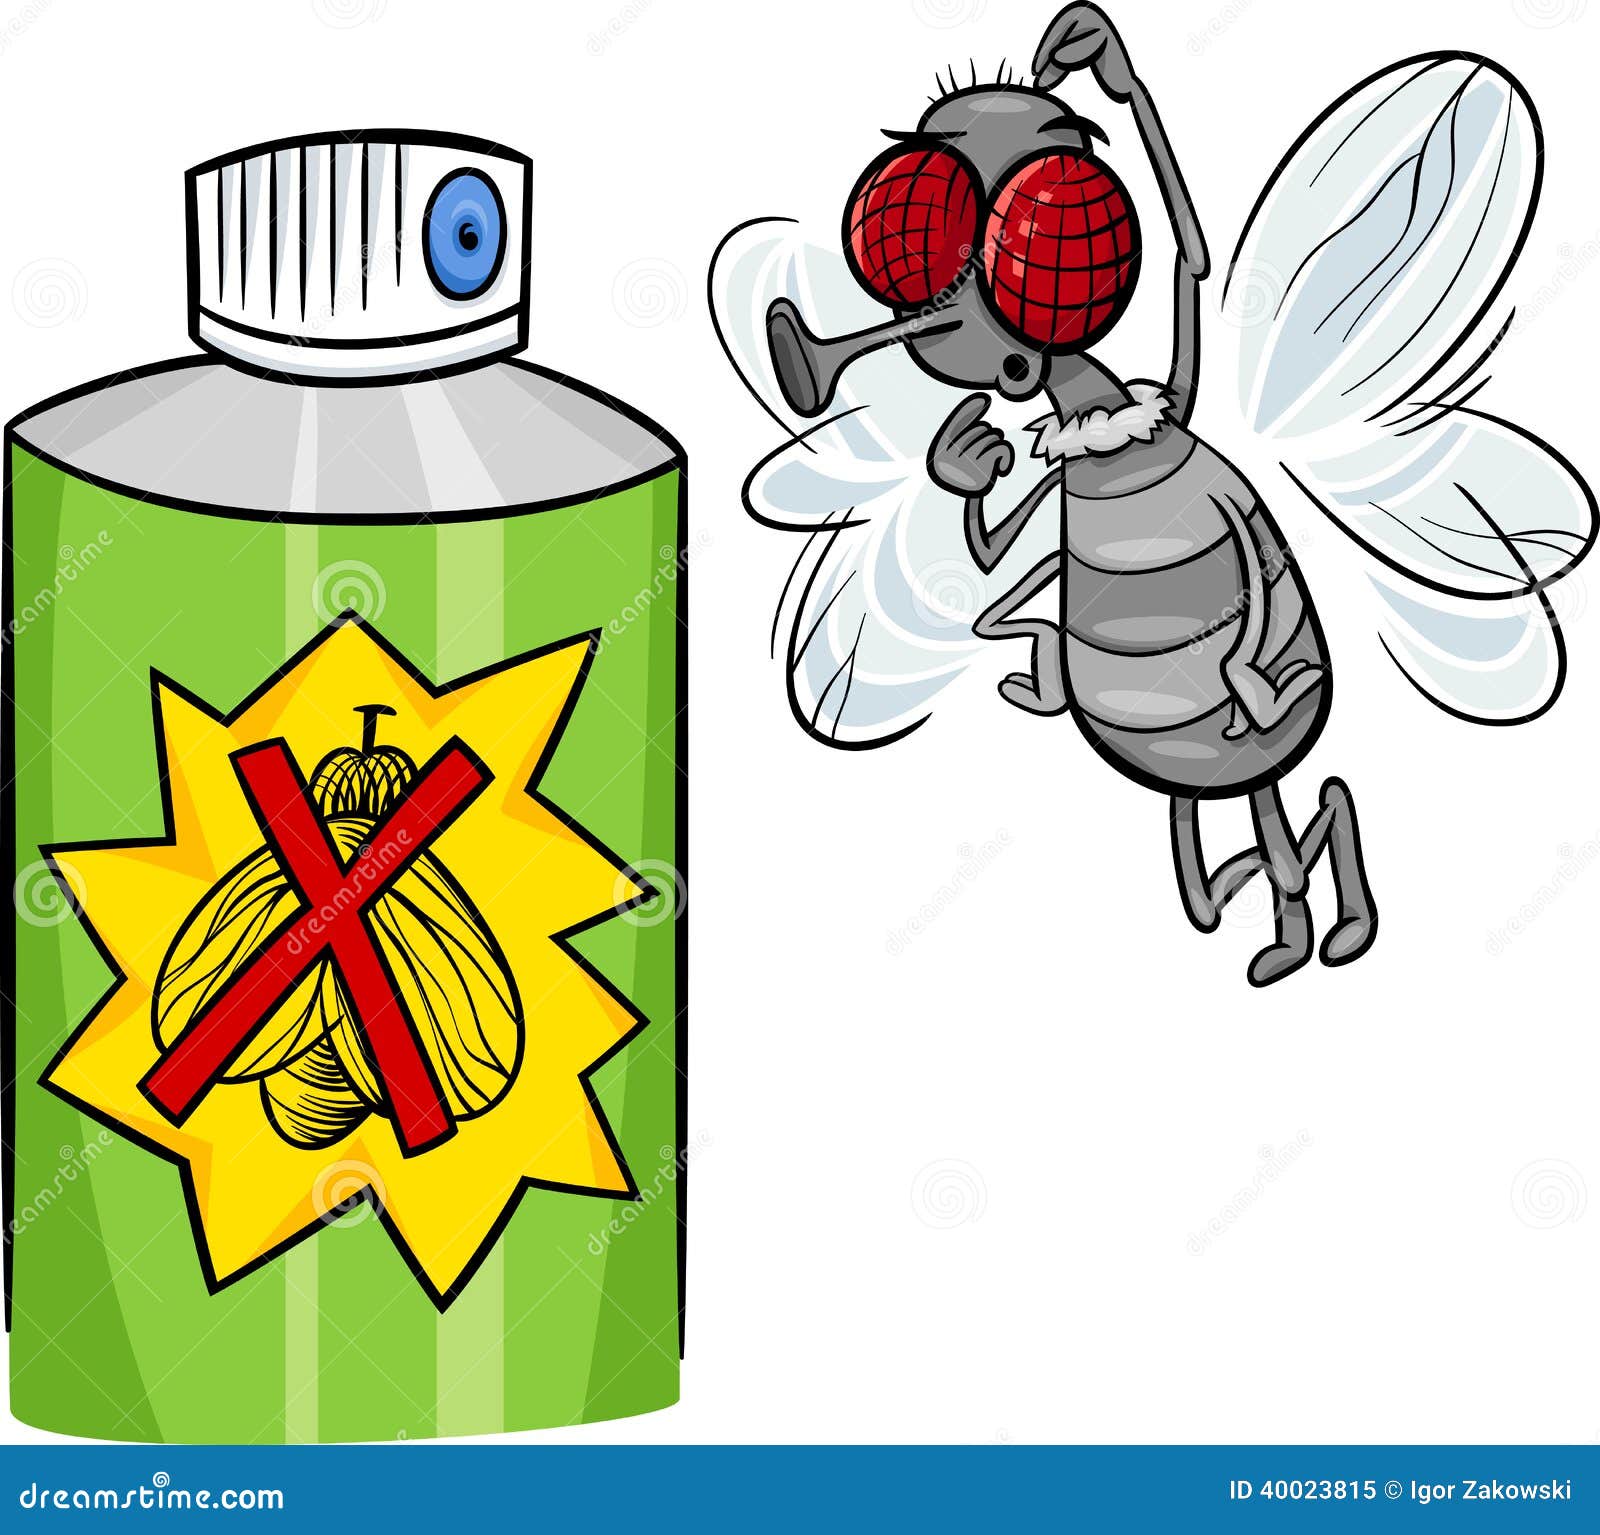 insect repellent clip art - photo #30